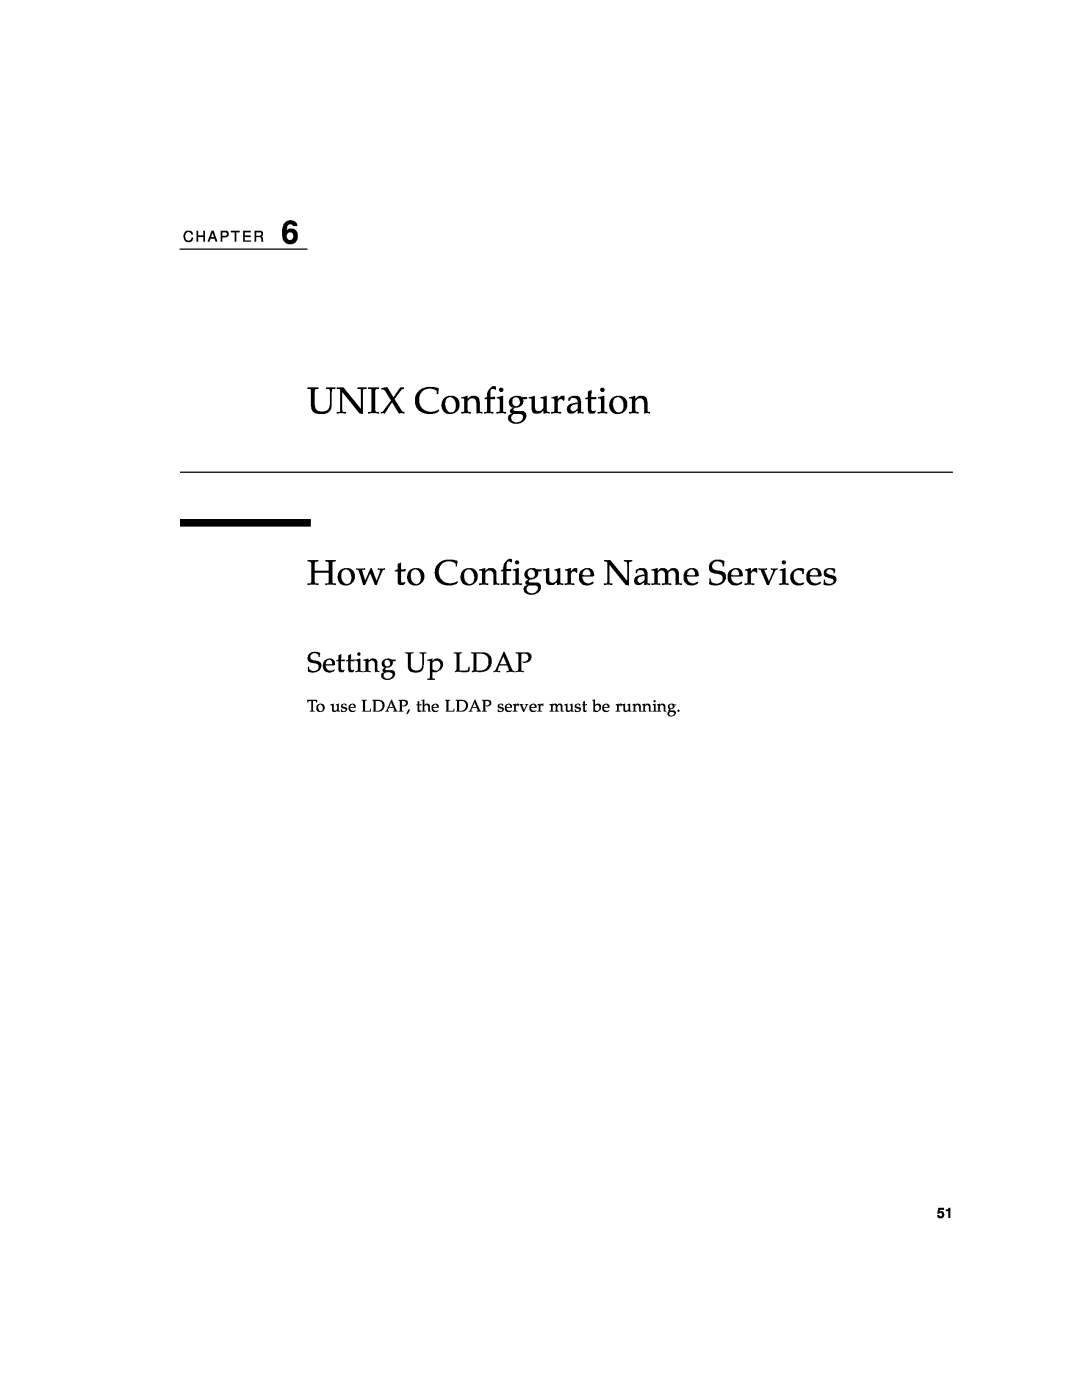 Sun Microsystems 5210 NAS manual UNIX Configuration, How to Configure Name Services, Setting Up LDAP 